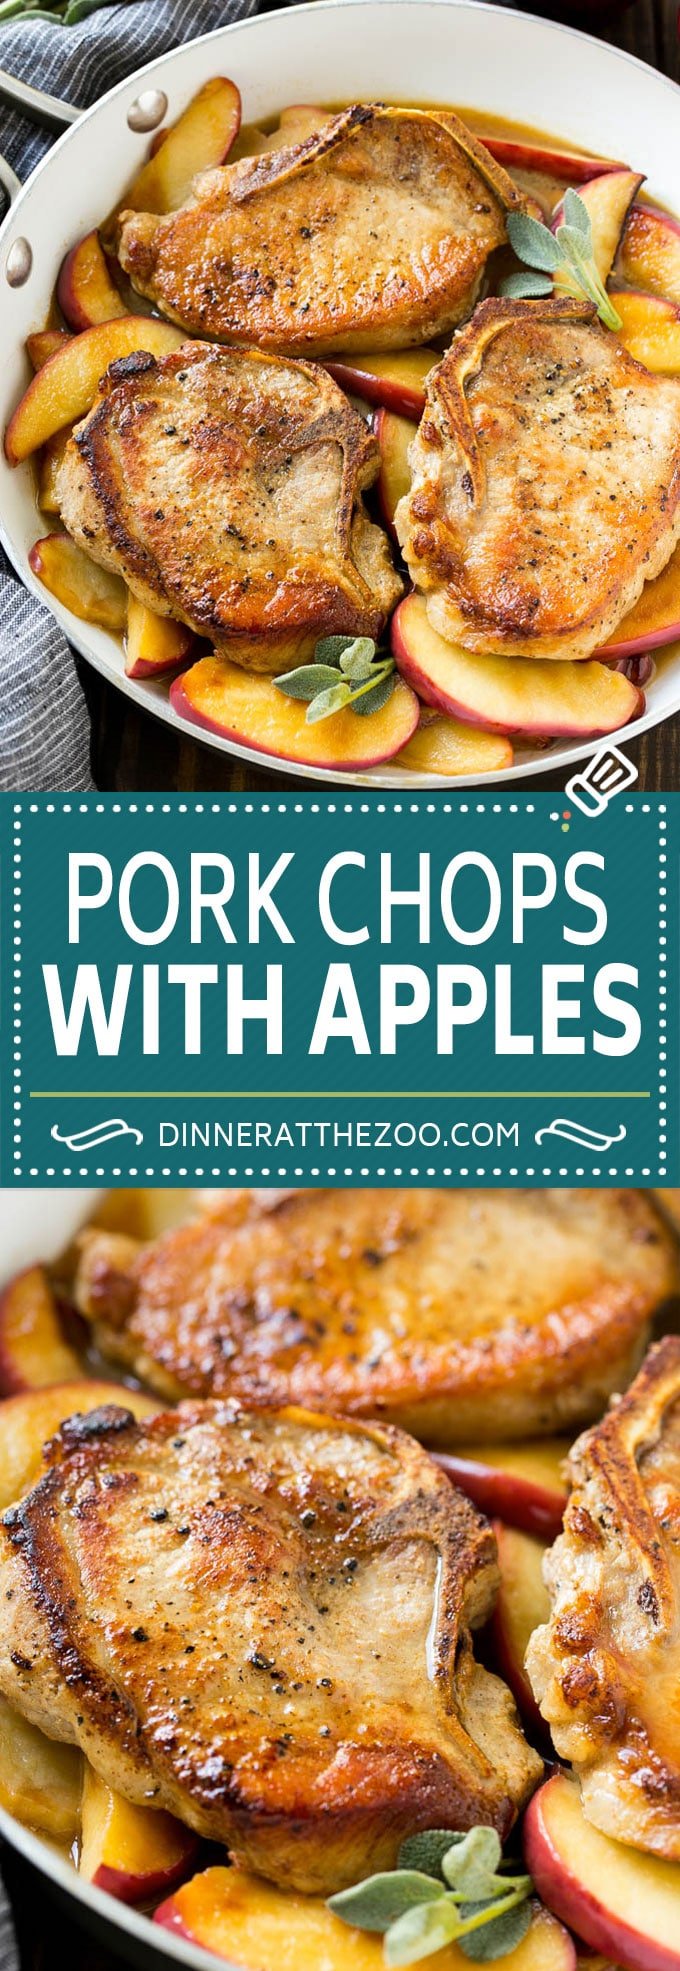 Apple Pork Chops Recipe | Pork Chops with Apples #pork #porkchops #apples #fall #dinner #dinneratthezoo